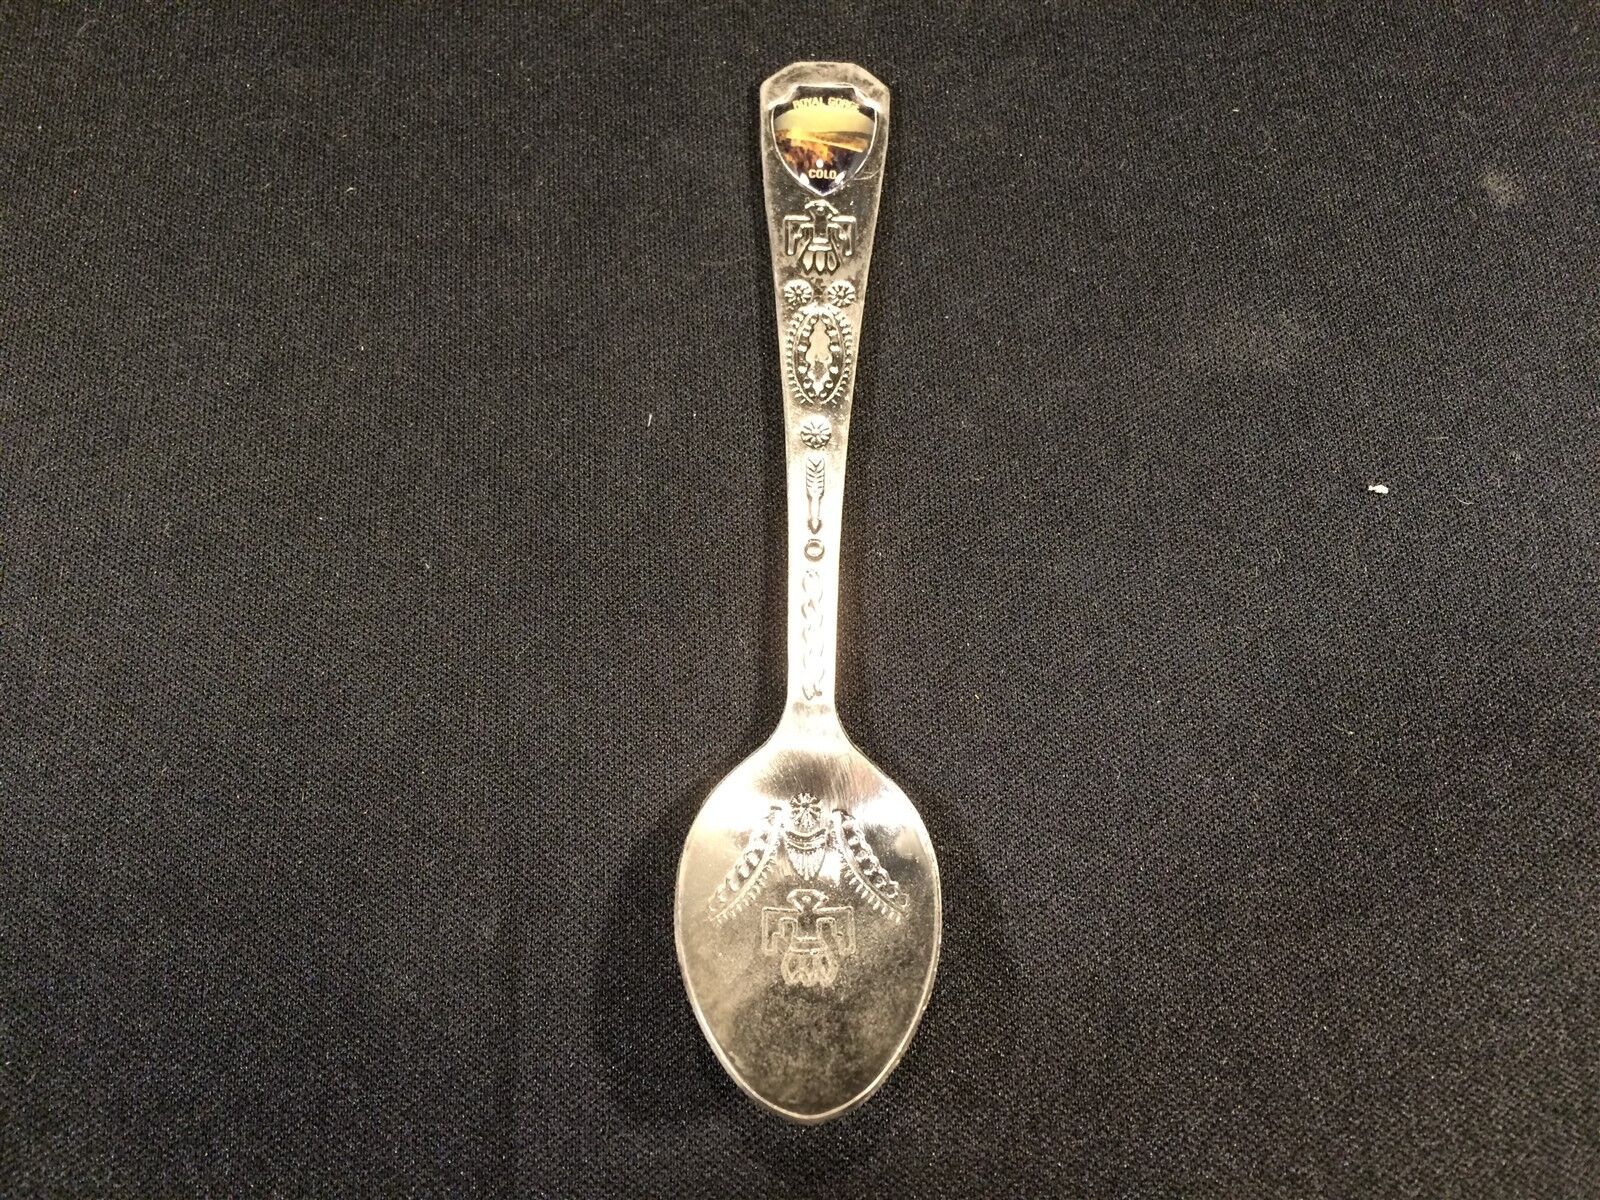 Vintage Royal Gorge Colorado Collectible Silver Spoon Souvenir